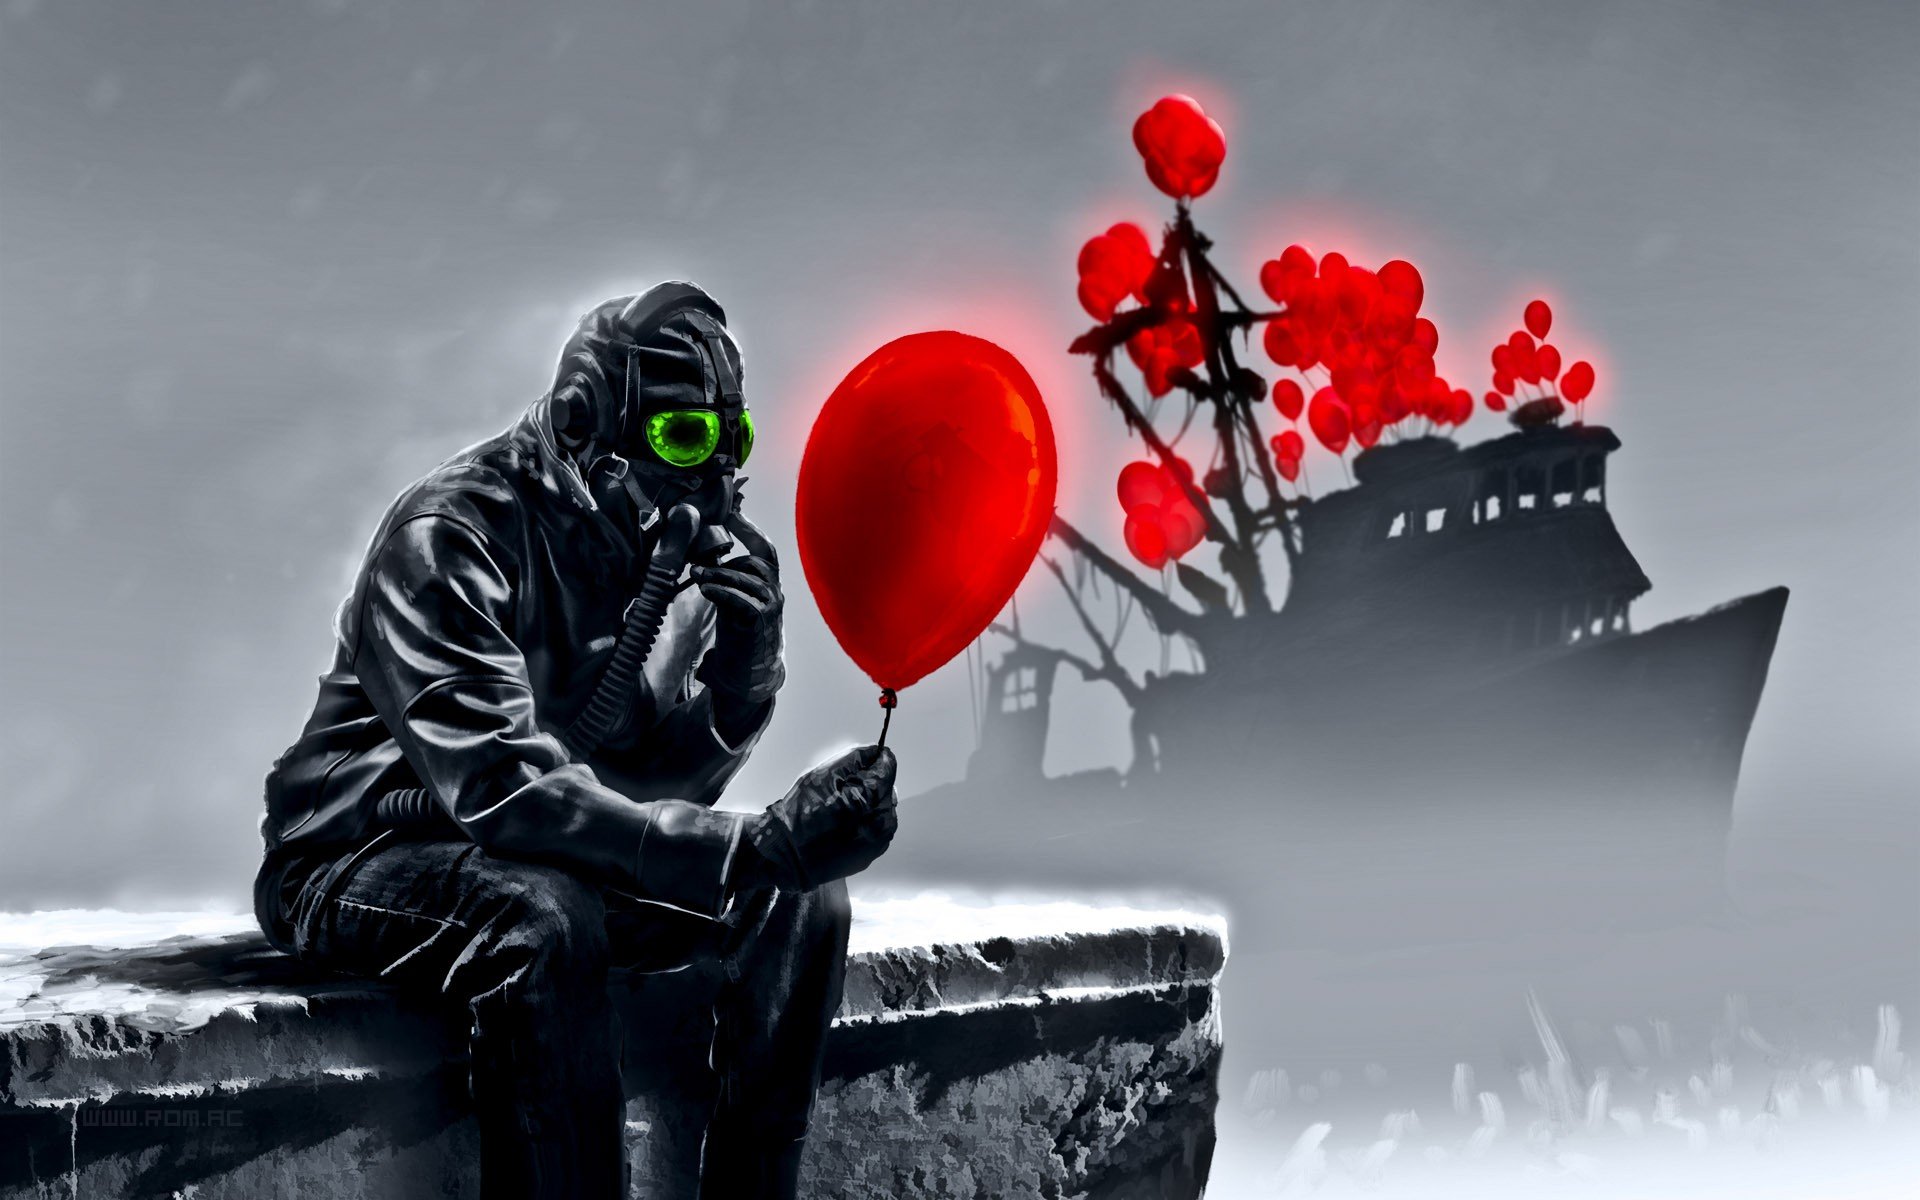 apocalyptic, Gas masks, Romantically Apocalyptic, Vitaly S Alexius, Balloons Wallpaper